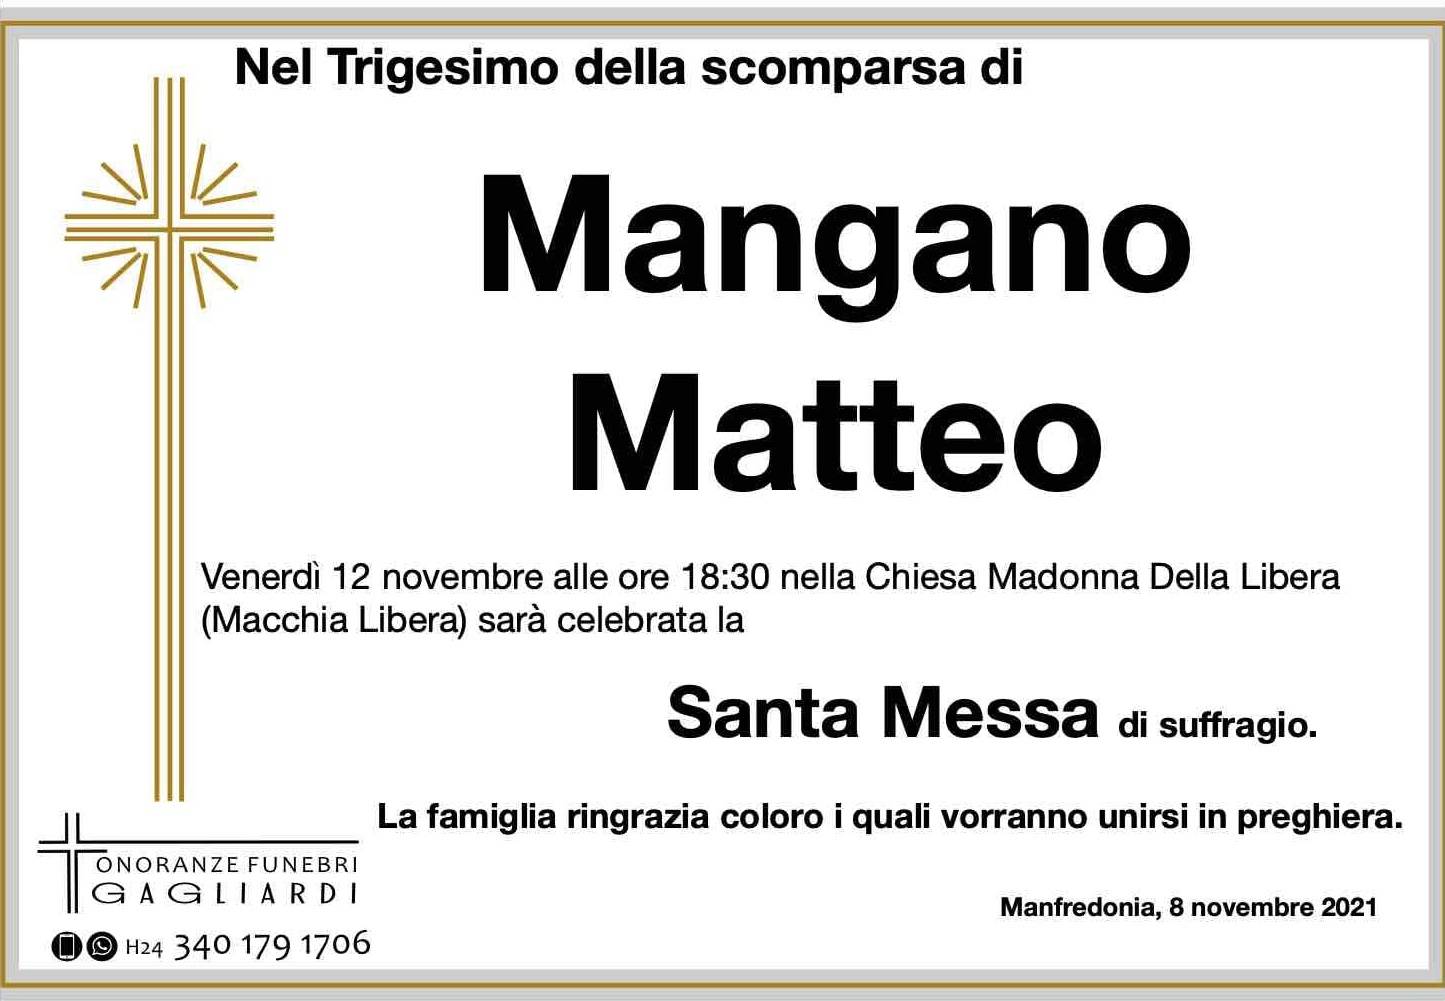 Matteo Mangano